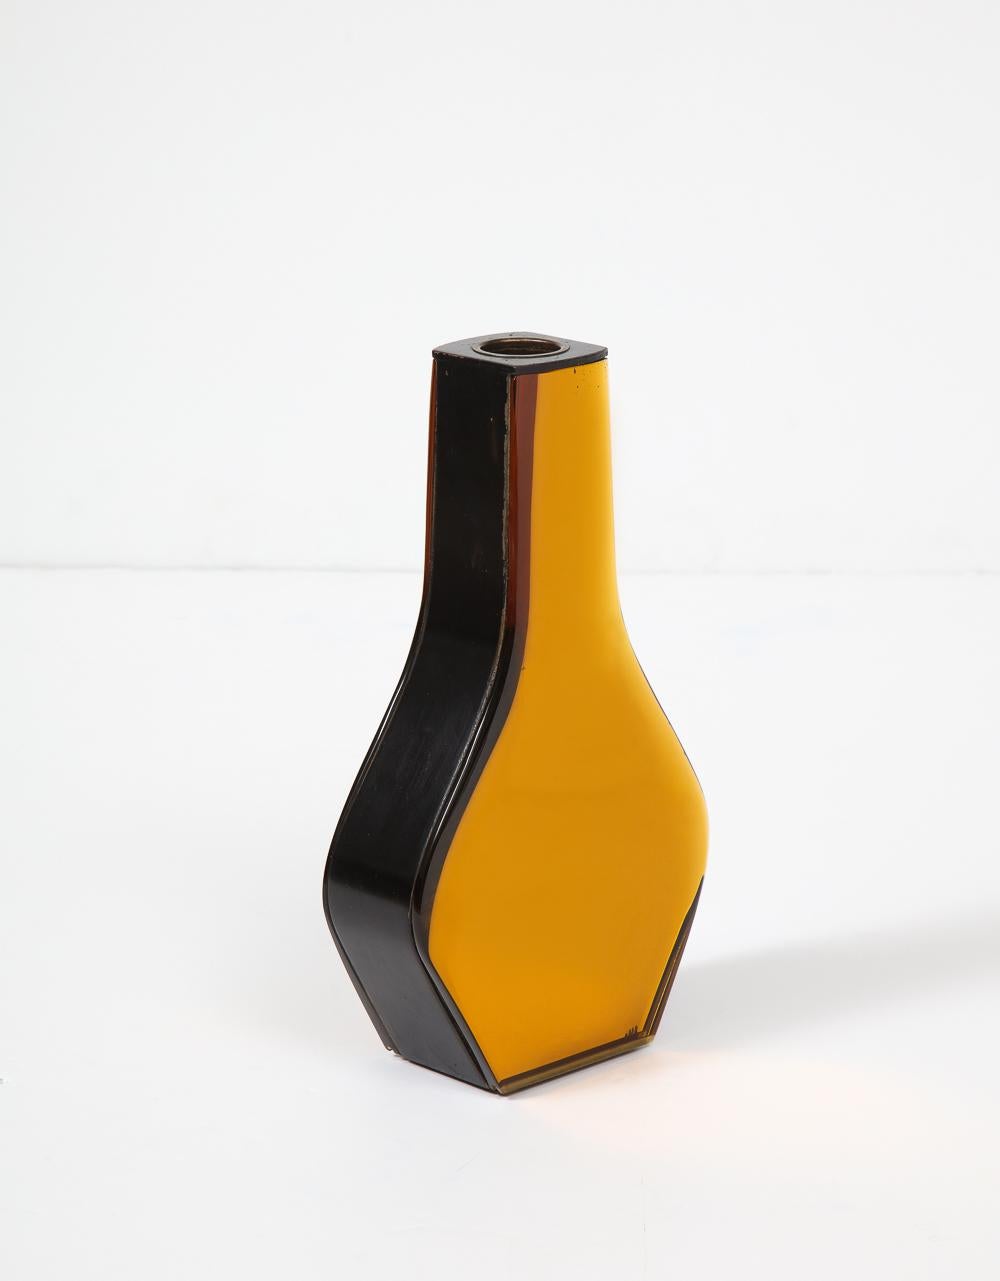 Rare, Colored Glass Vases, Model No. 2122, by Max Ingrand for Fontana Arte 1